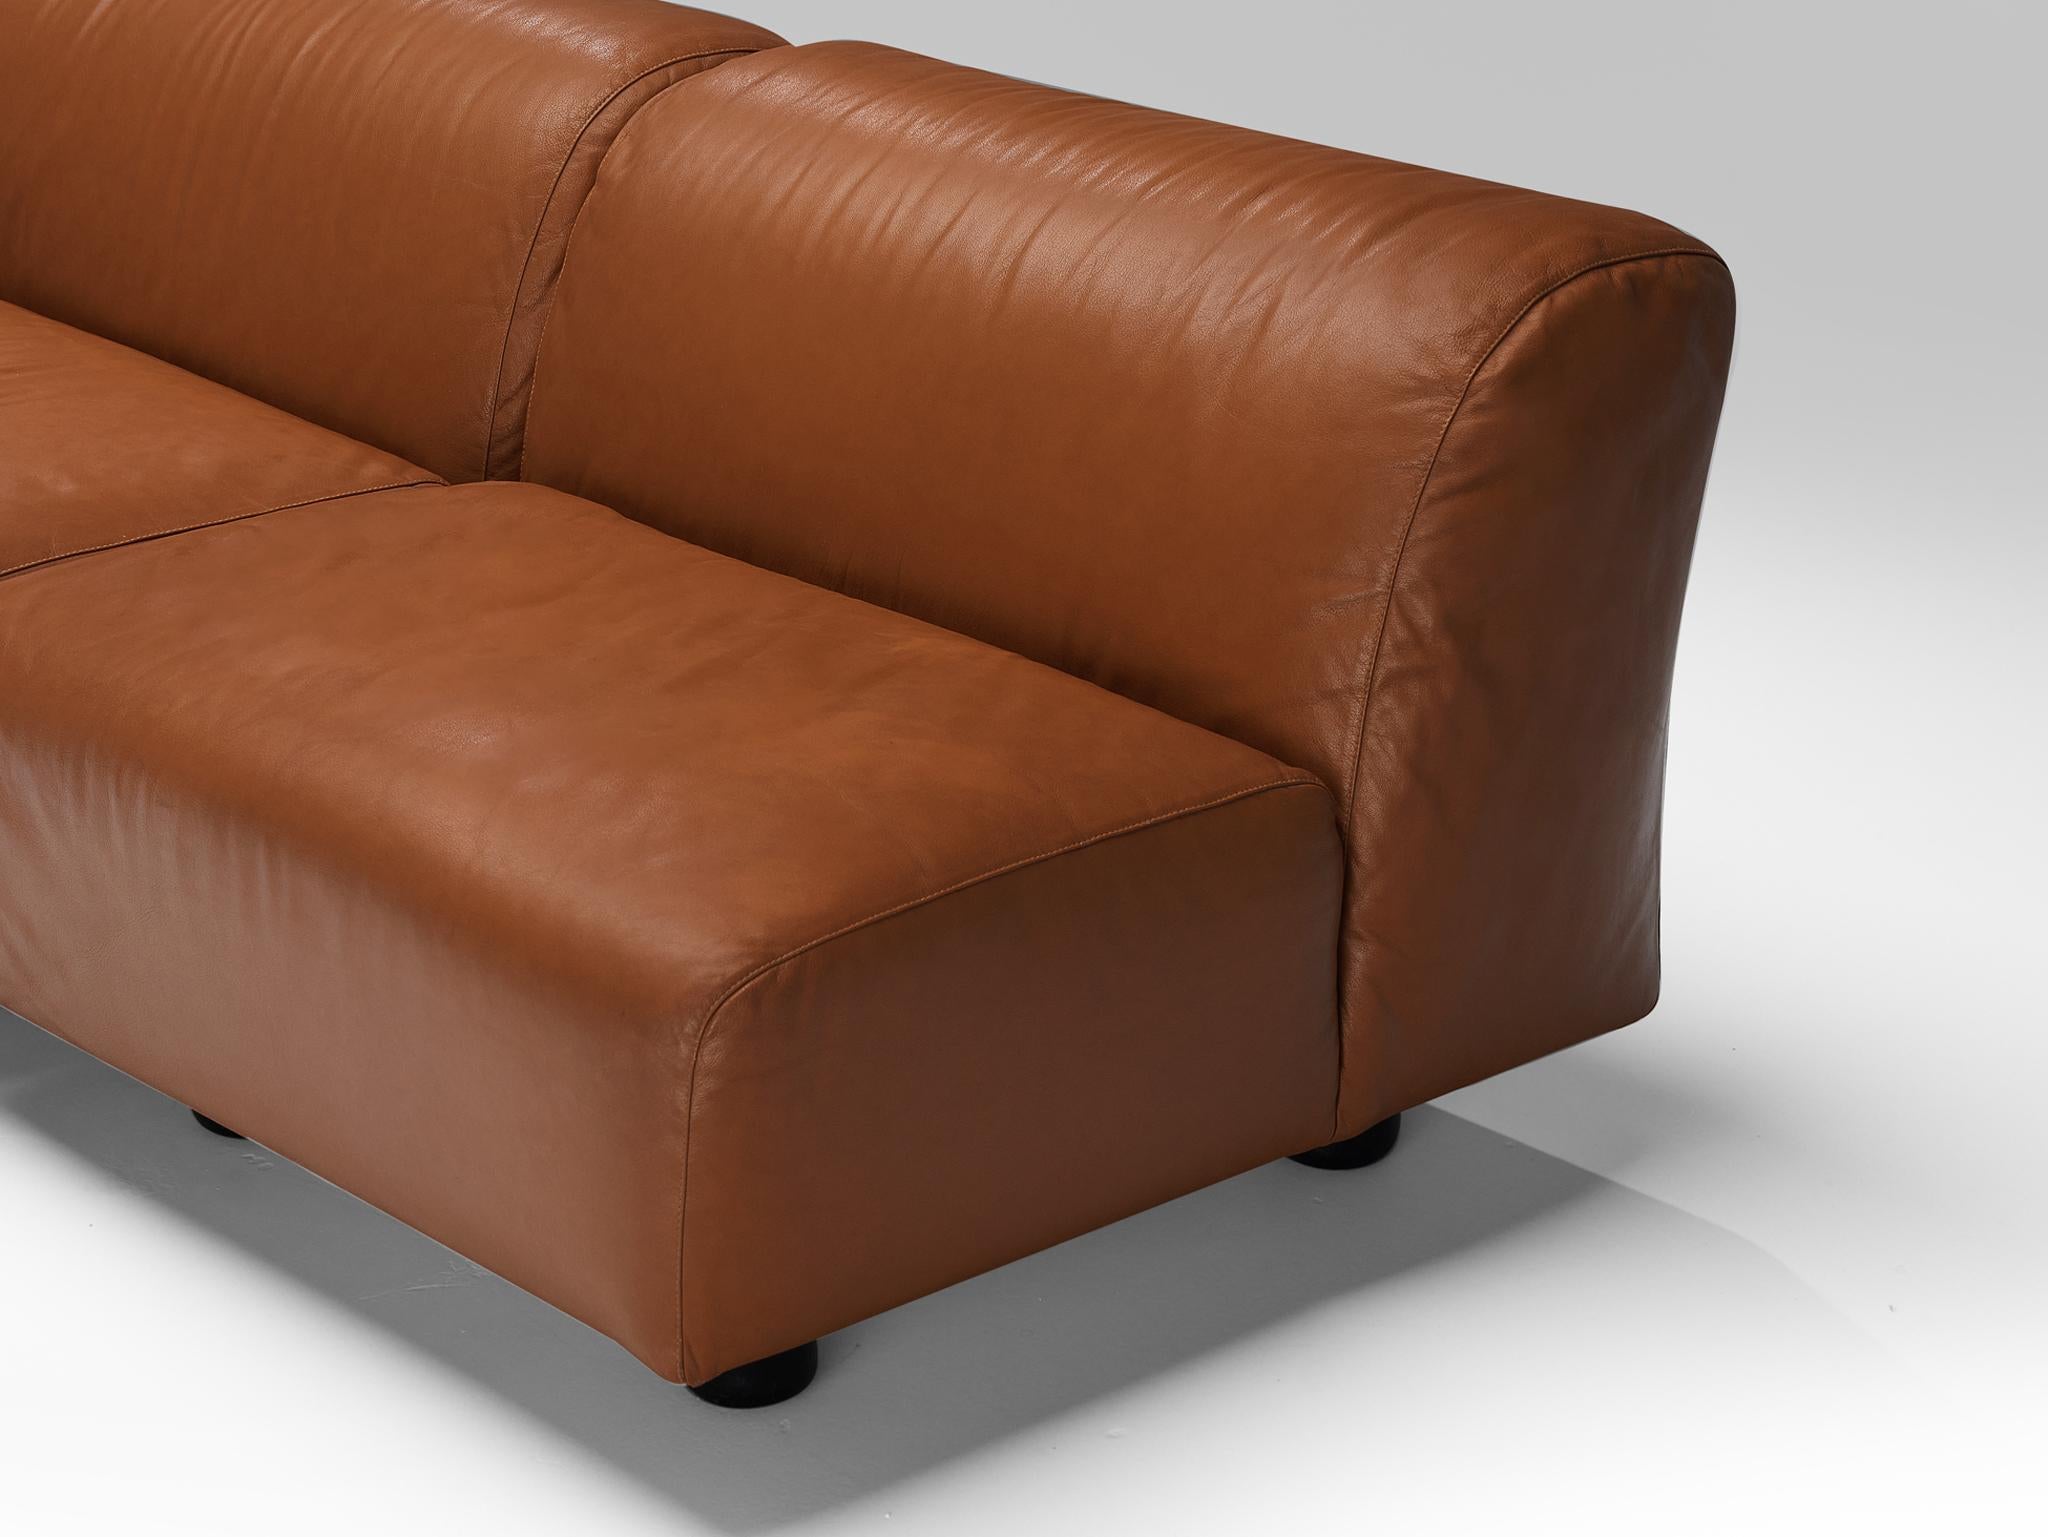 Vico Magistretti for Cassina 'Fiandra' Modular Sofa in Brown Leather  In Good Condition For Sale In Waalwijk, NL